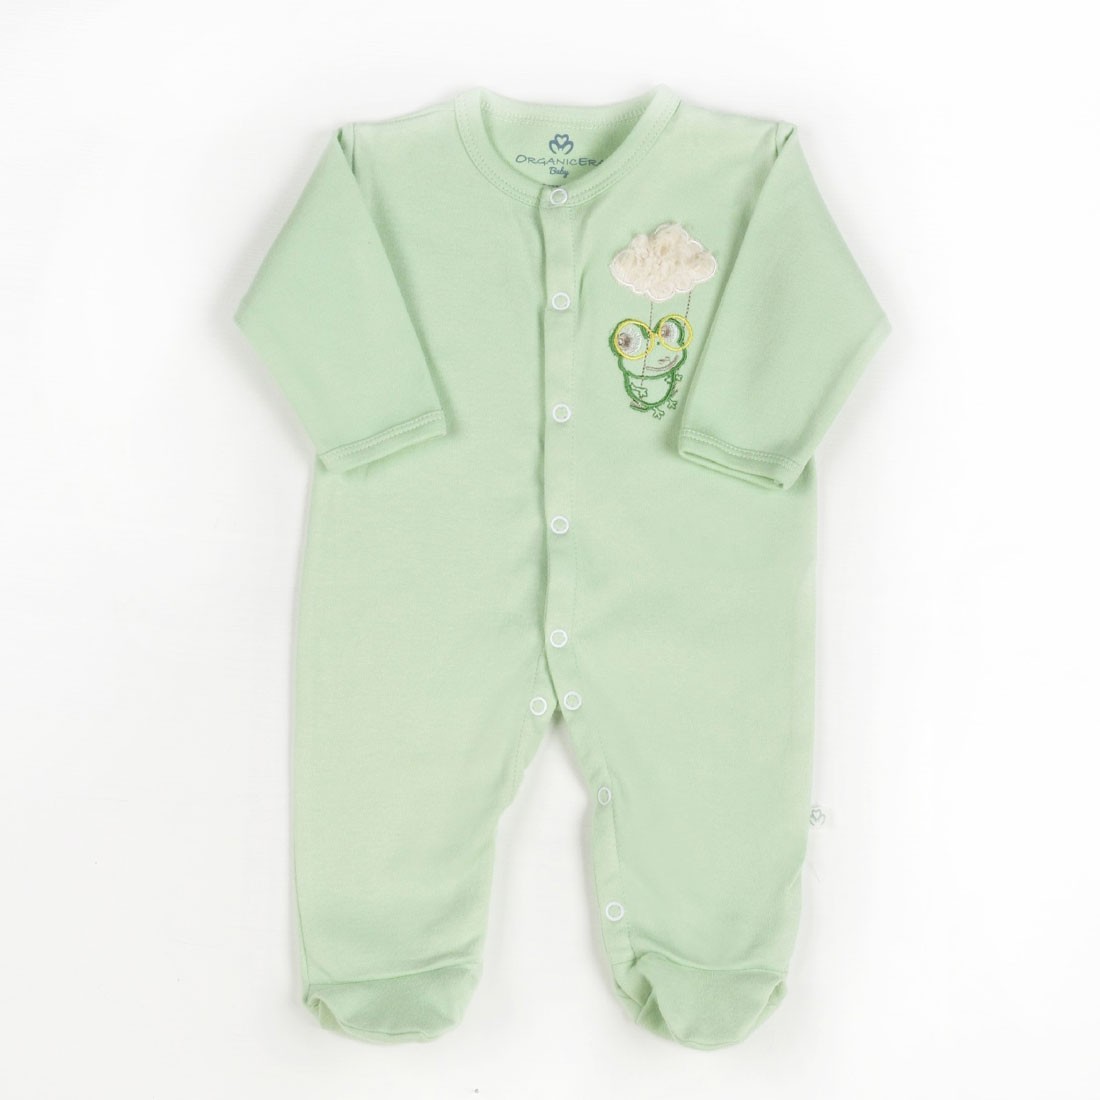 OrganicEra Organic Baby Sleepsuit